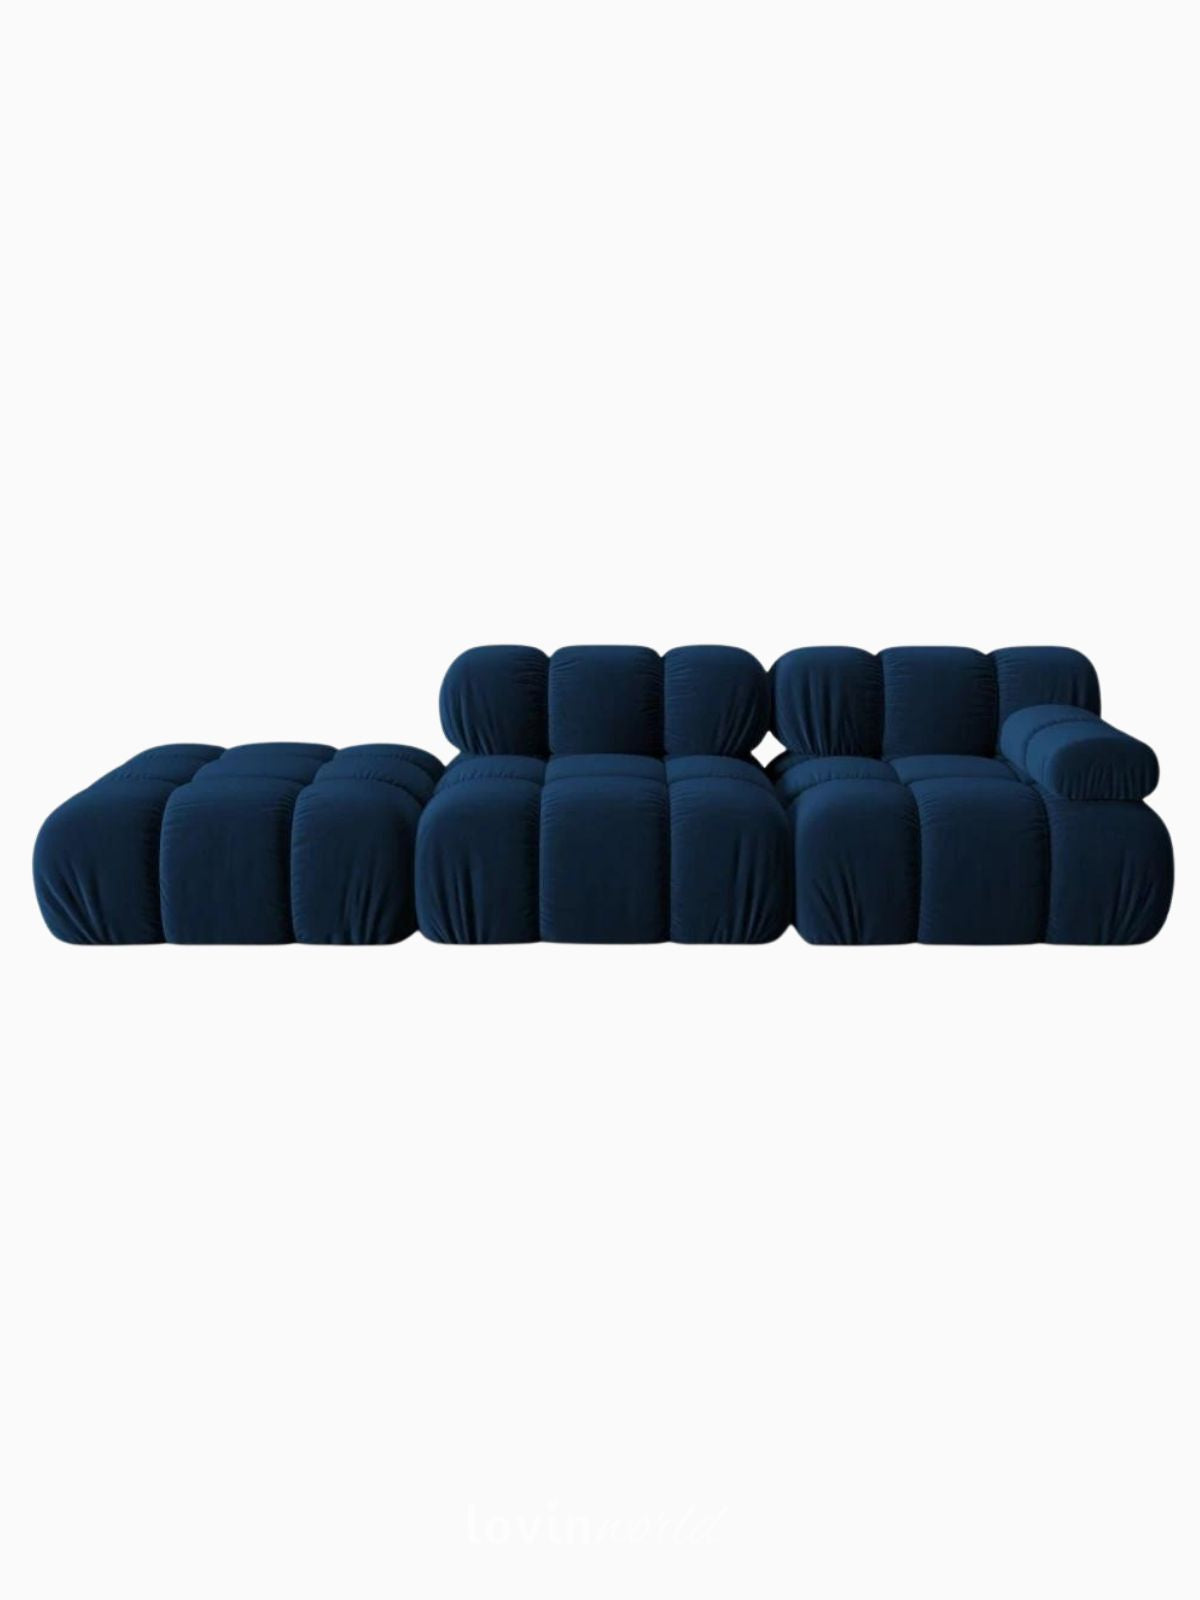 Divano modulare 4 sedute Bellis in velluto, colore blu-1